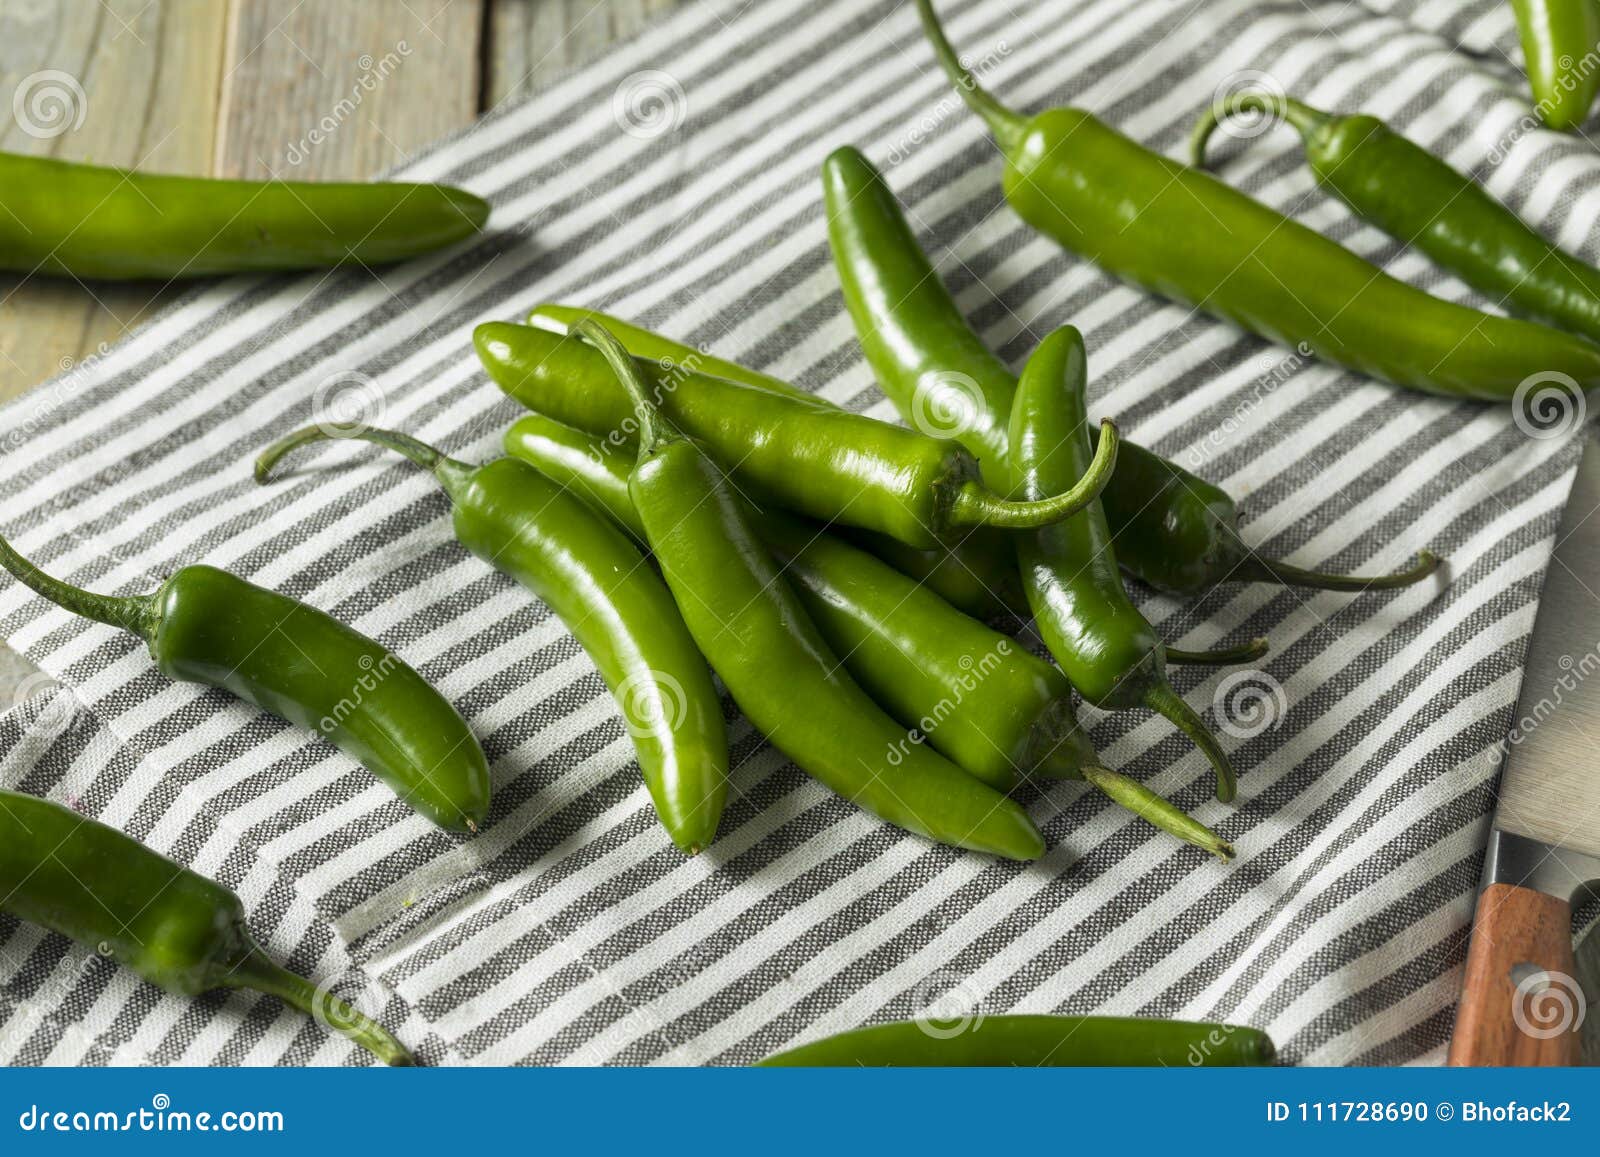 raw green organic serrano peppers